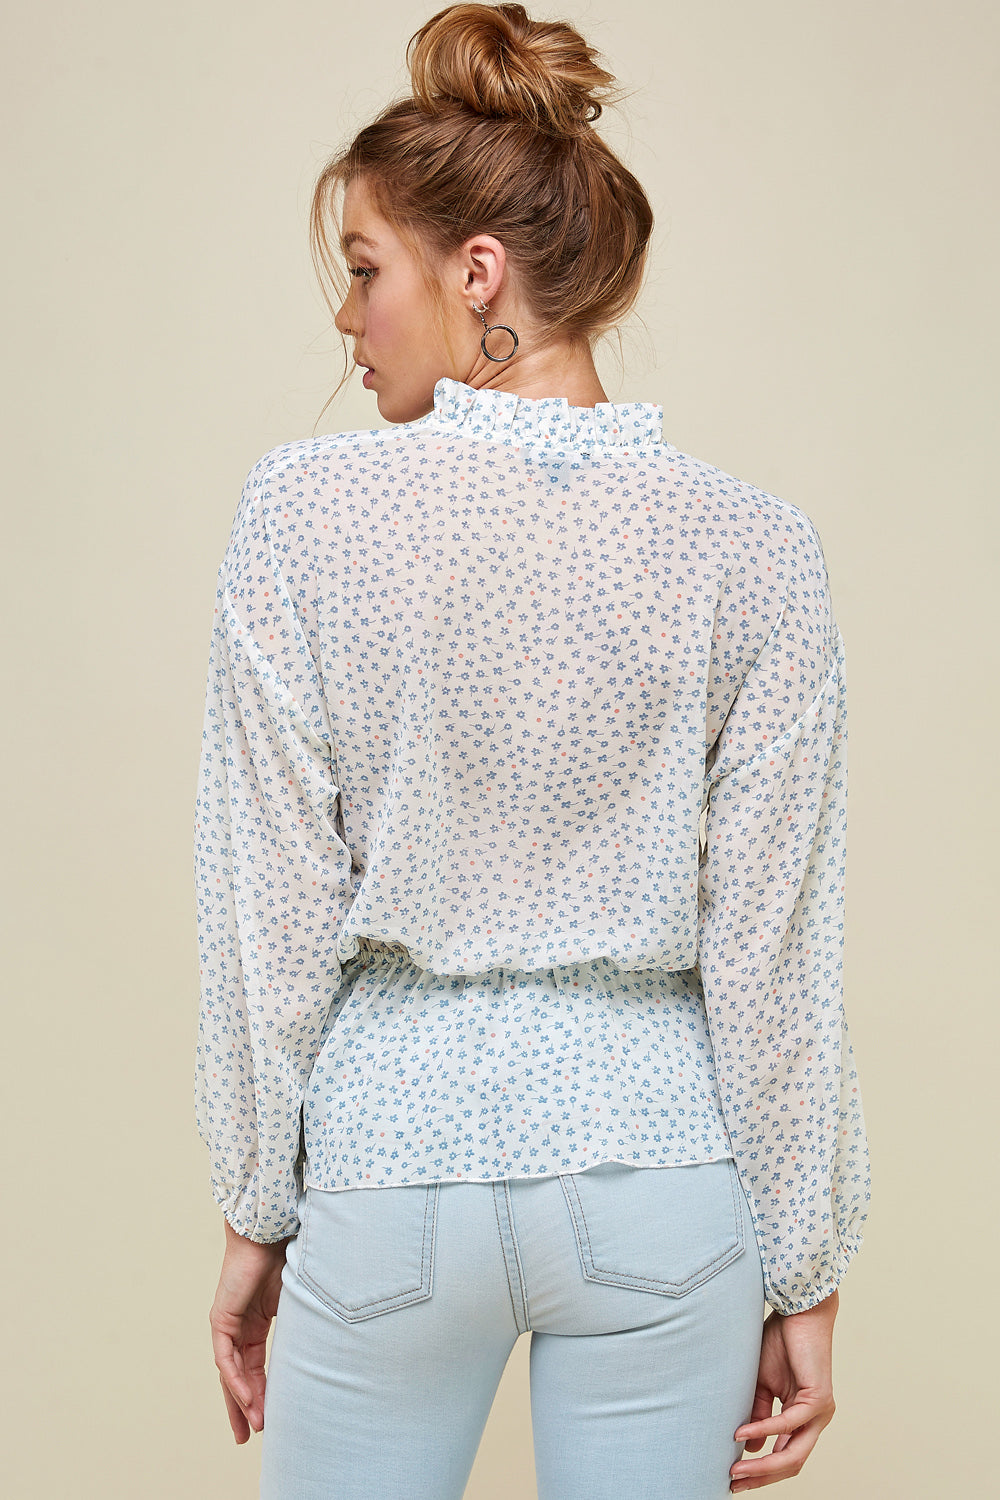 [$4/piece] Floral printed wrap blouse top